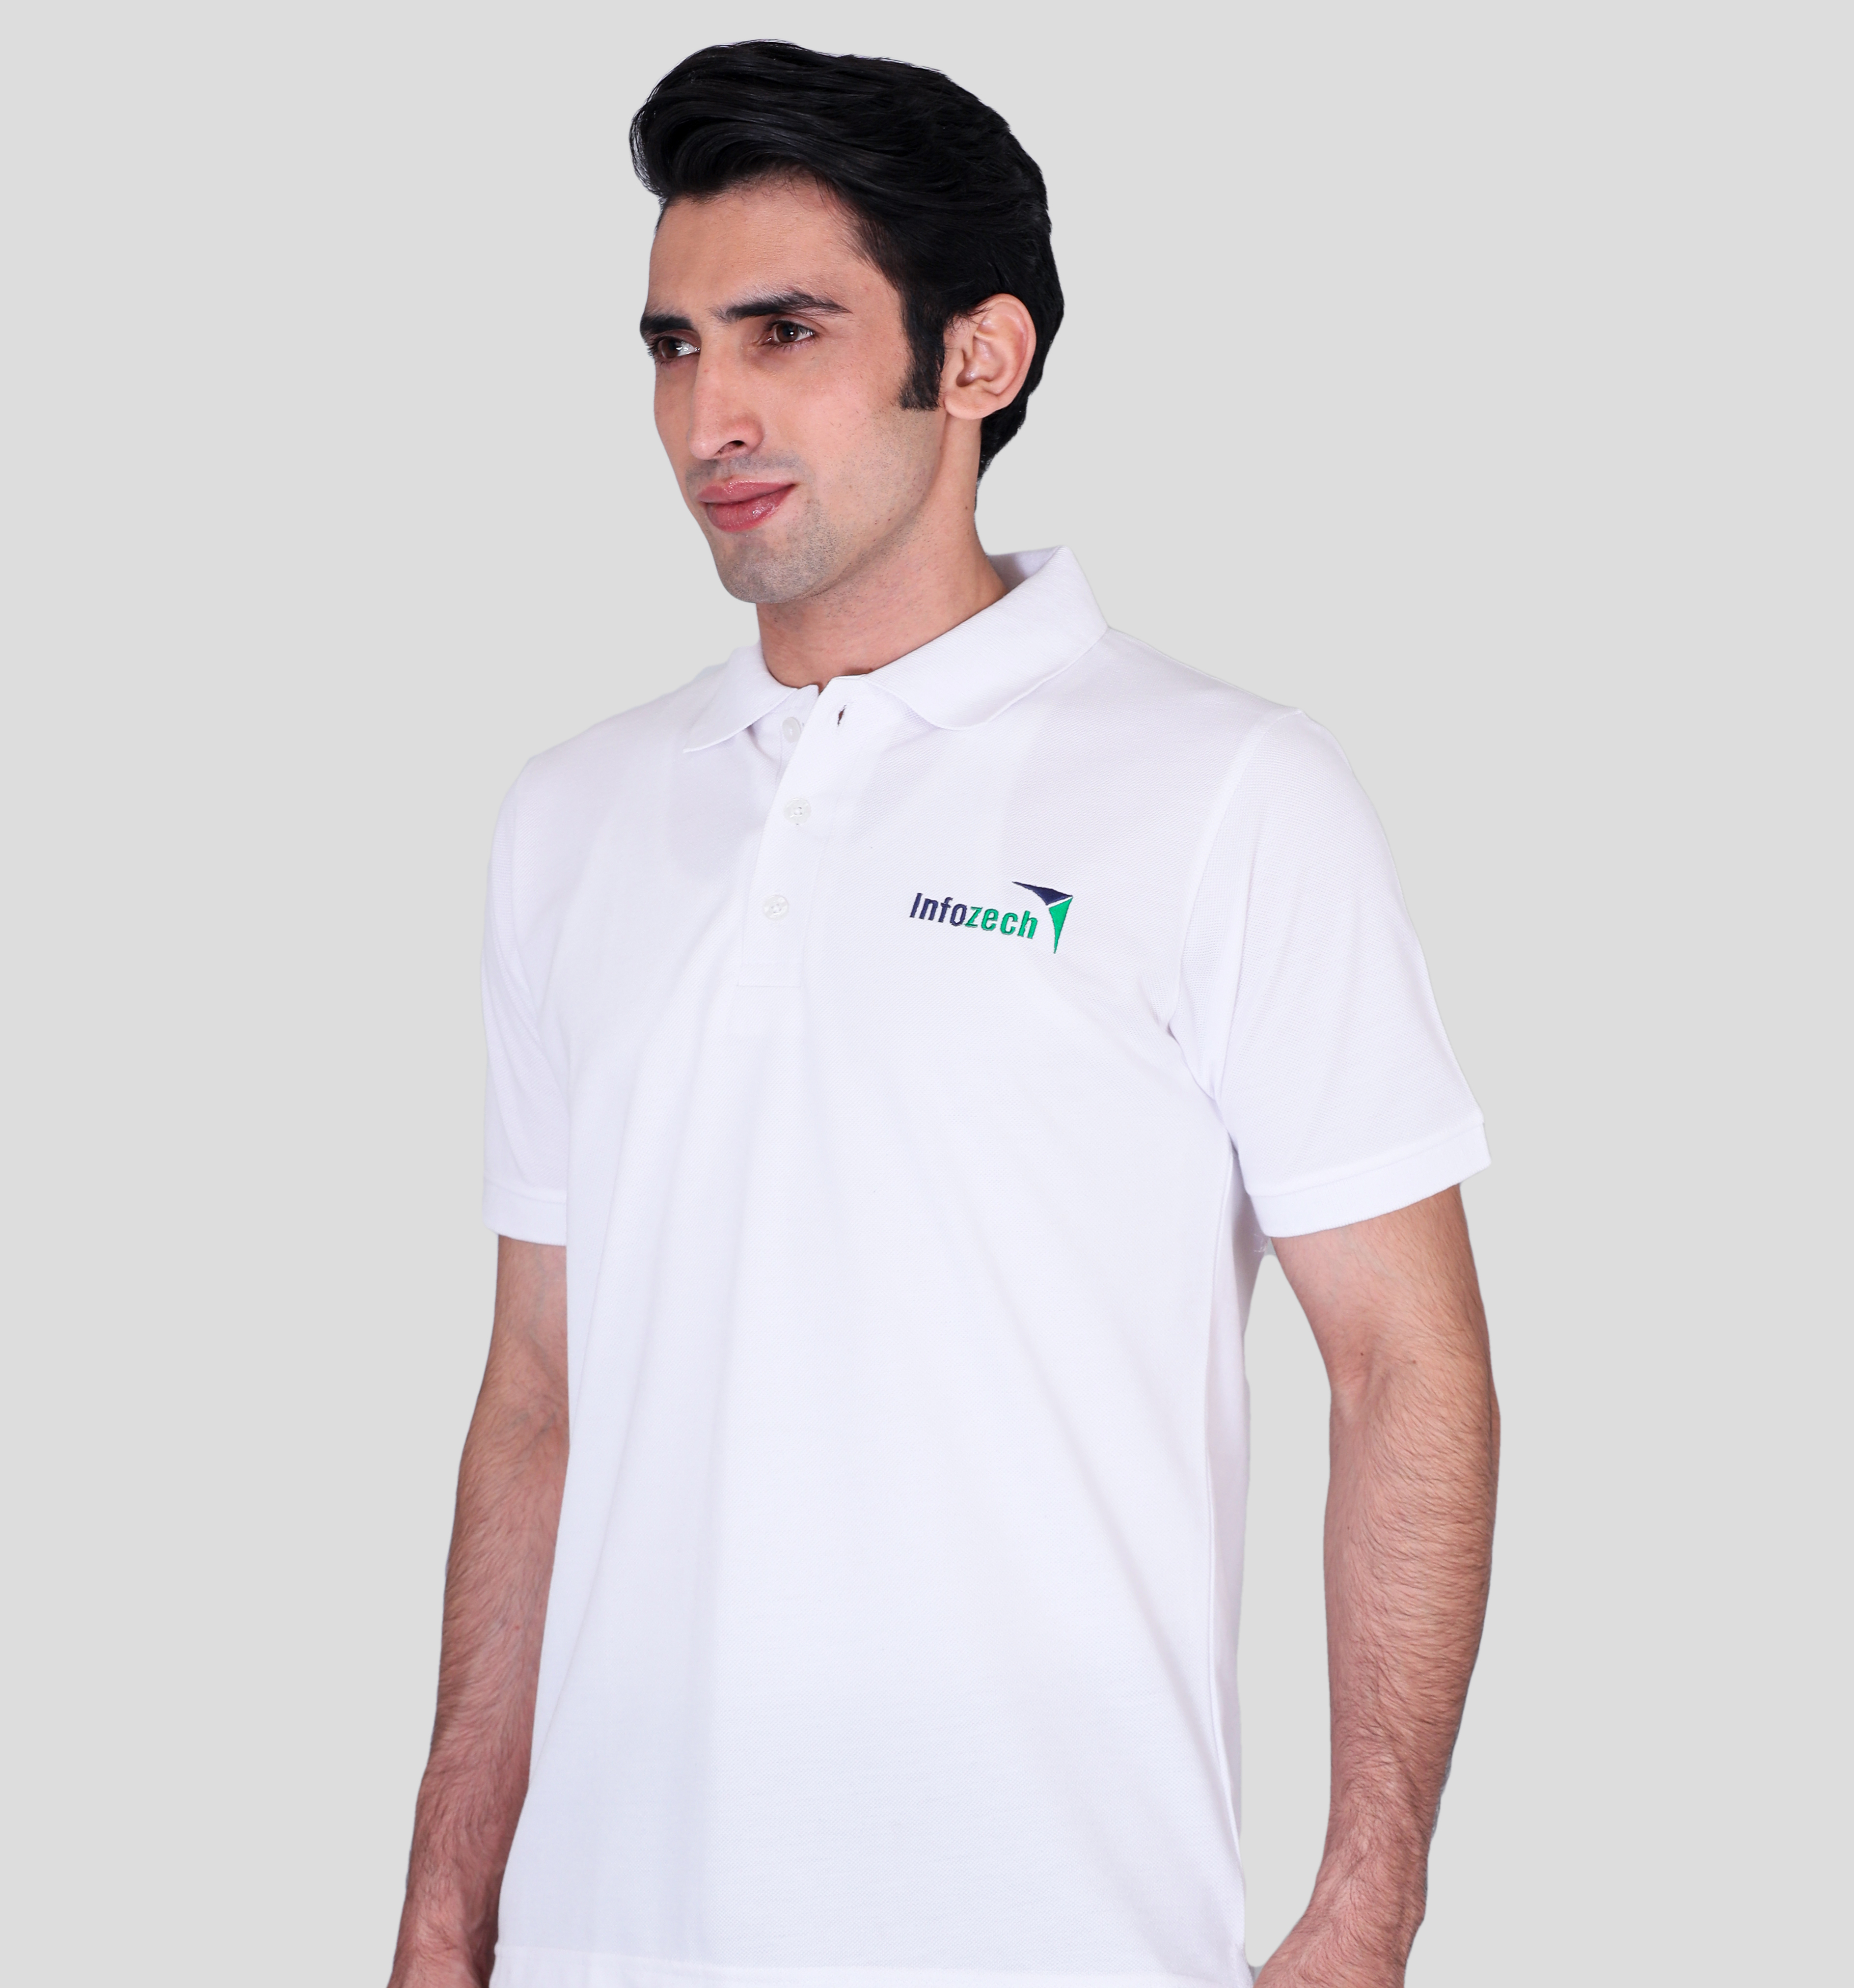 Infozech white custom polo t-shirts with company logo